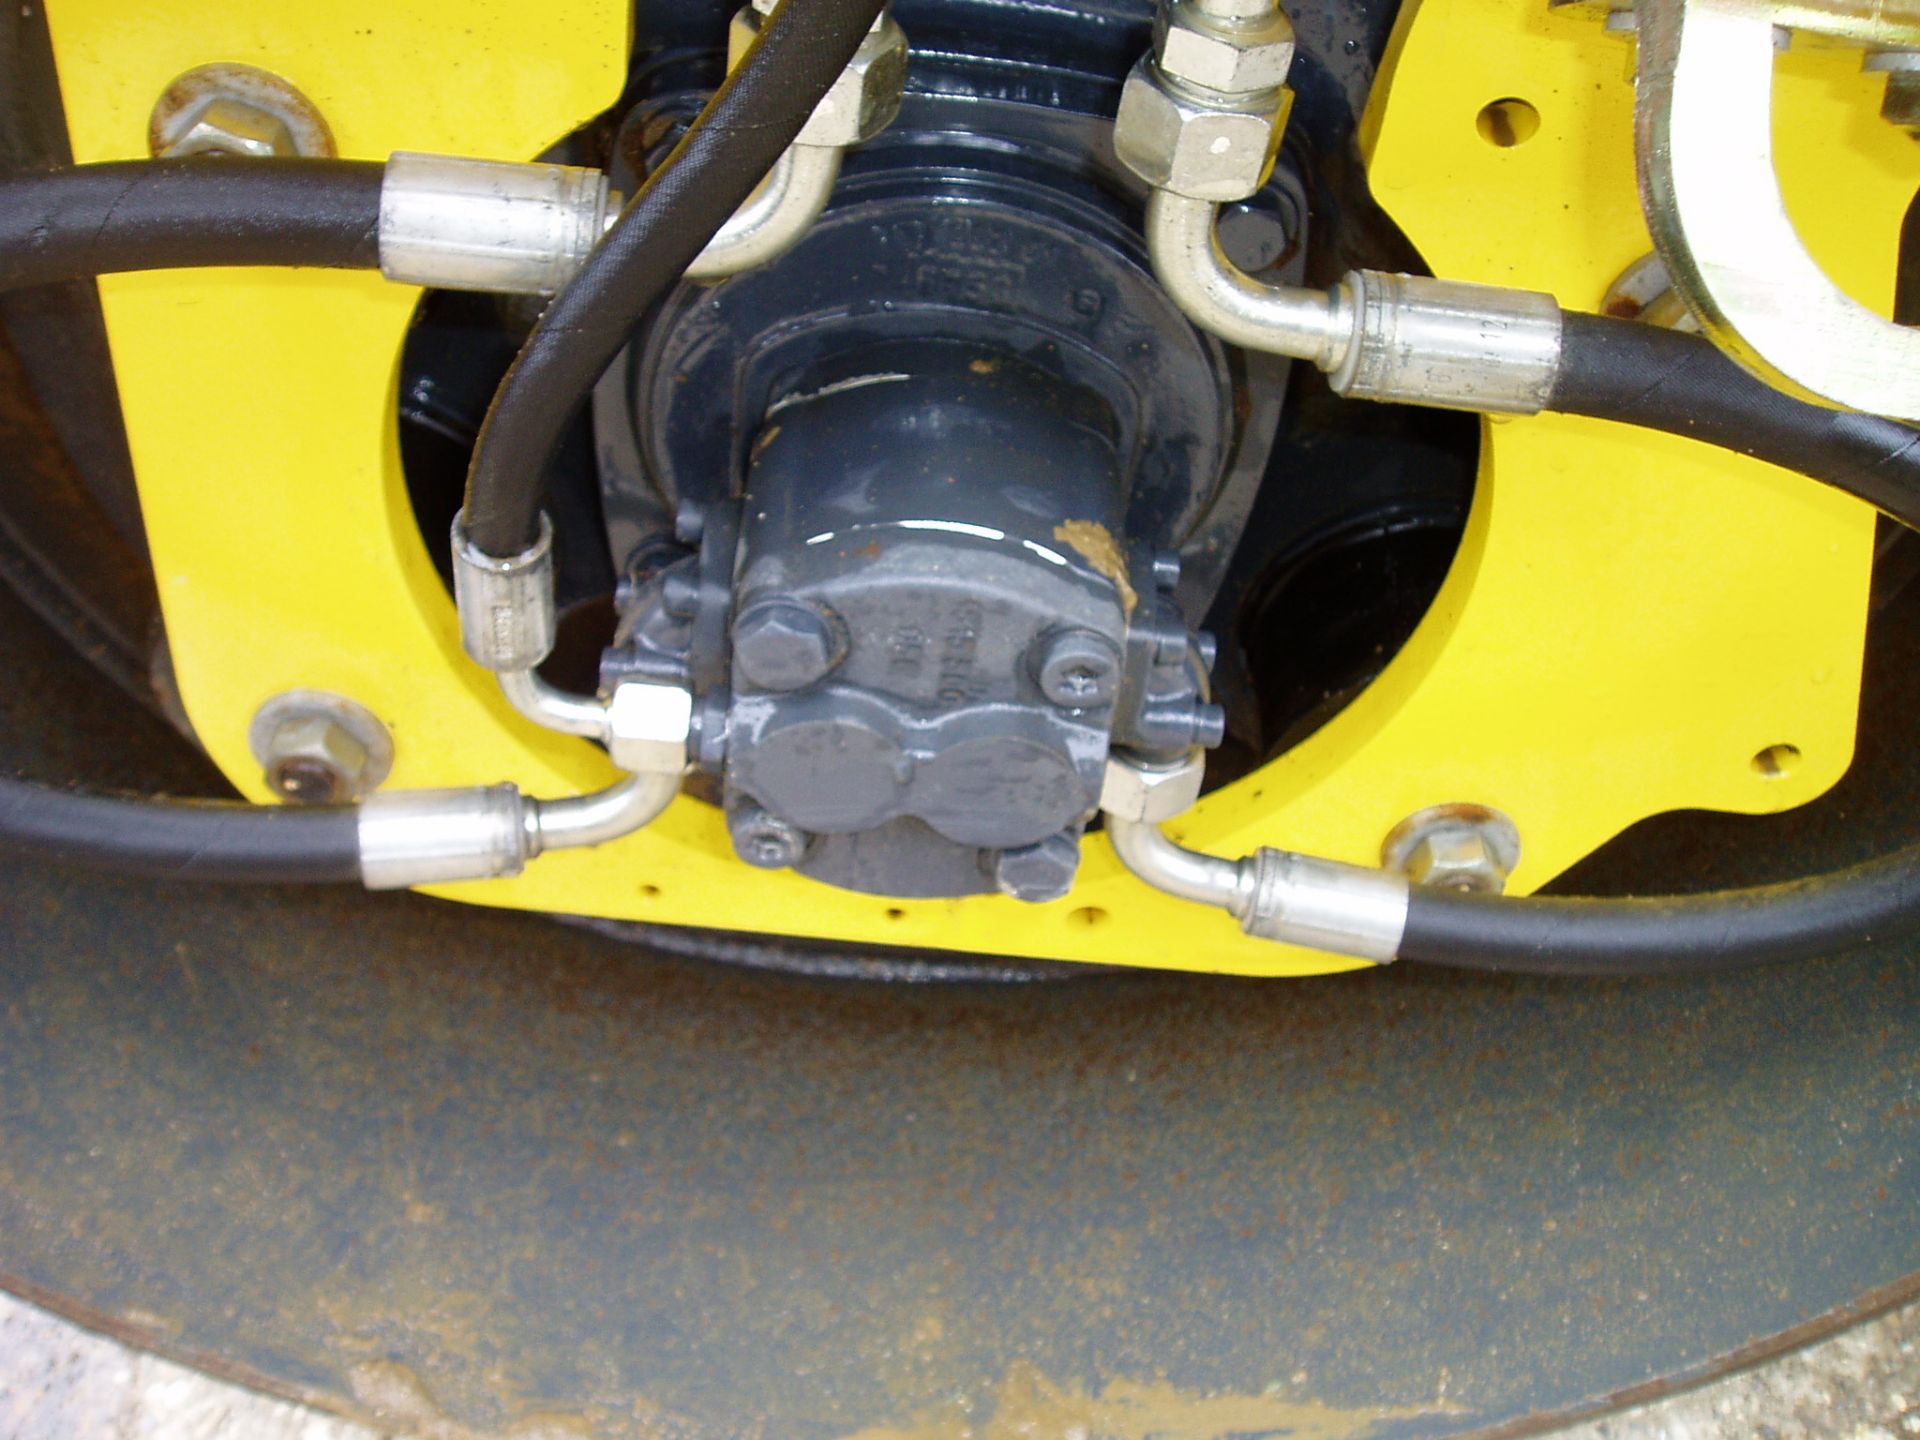 Bomag BW120 AD5 1200mm Tandem Roller (SOL 06125) - Image 4 of 19